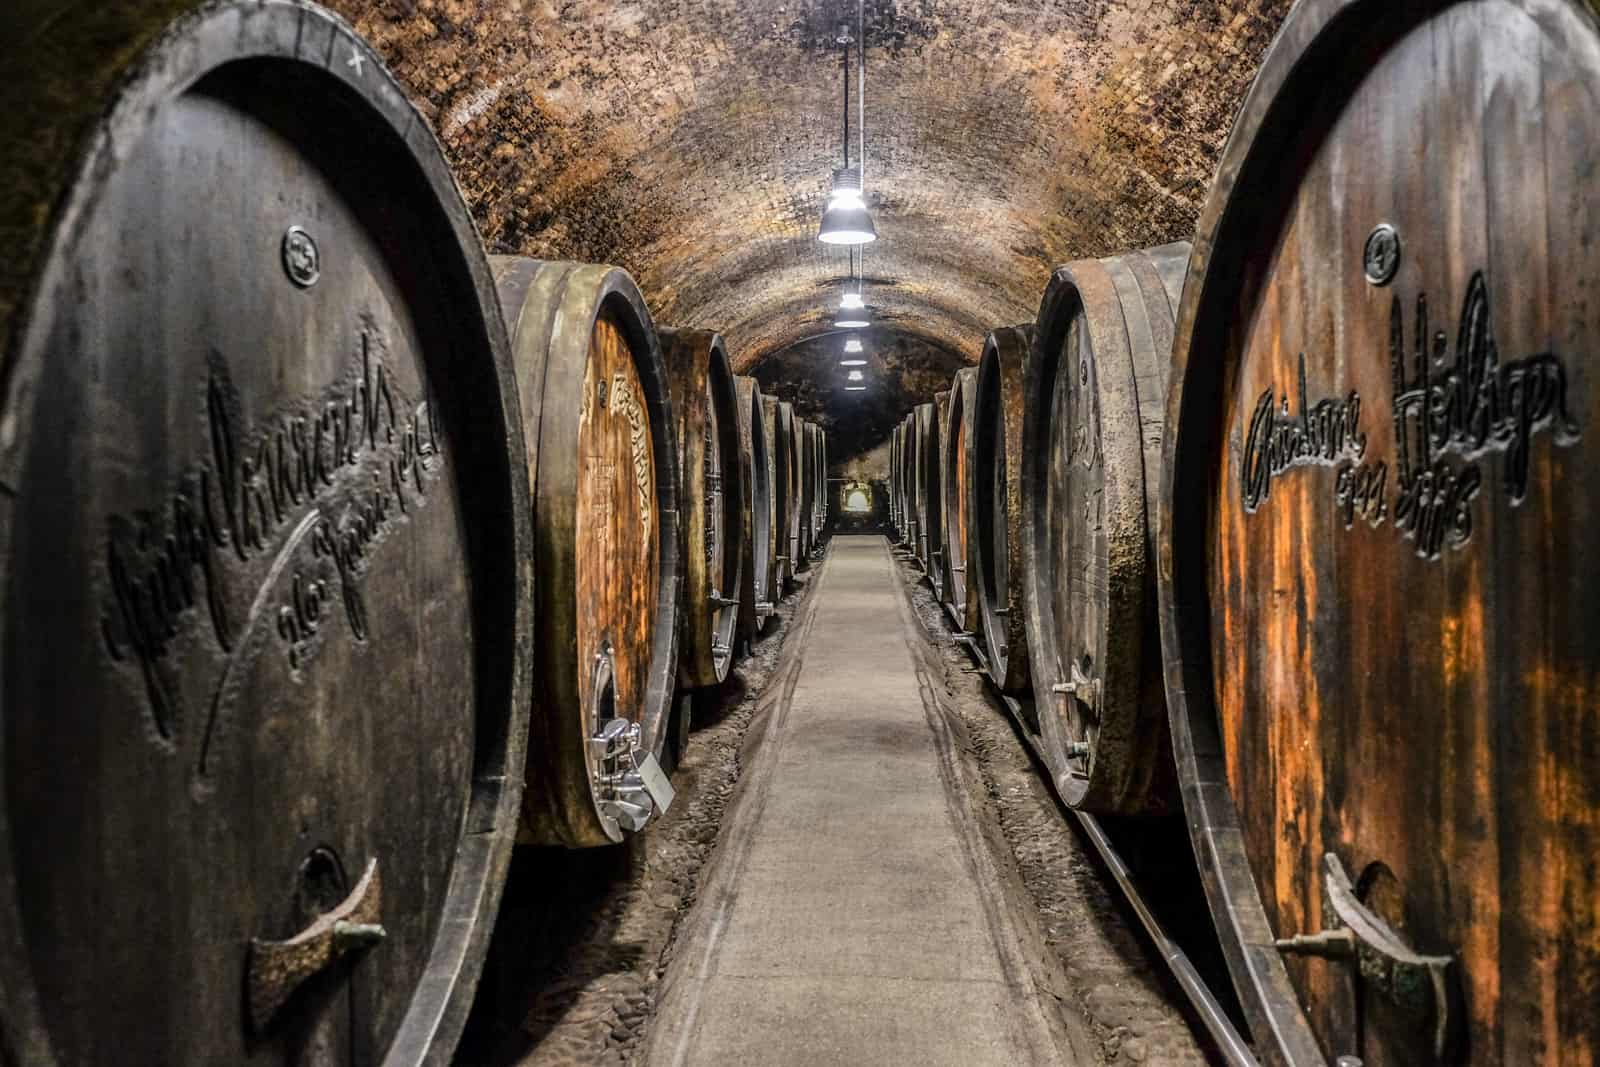 Rows of huge dark wood aged wine barrels line a dimly lit brick cellar in the Wachau in Austria